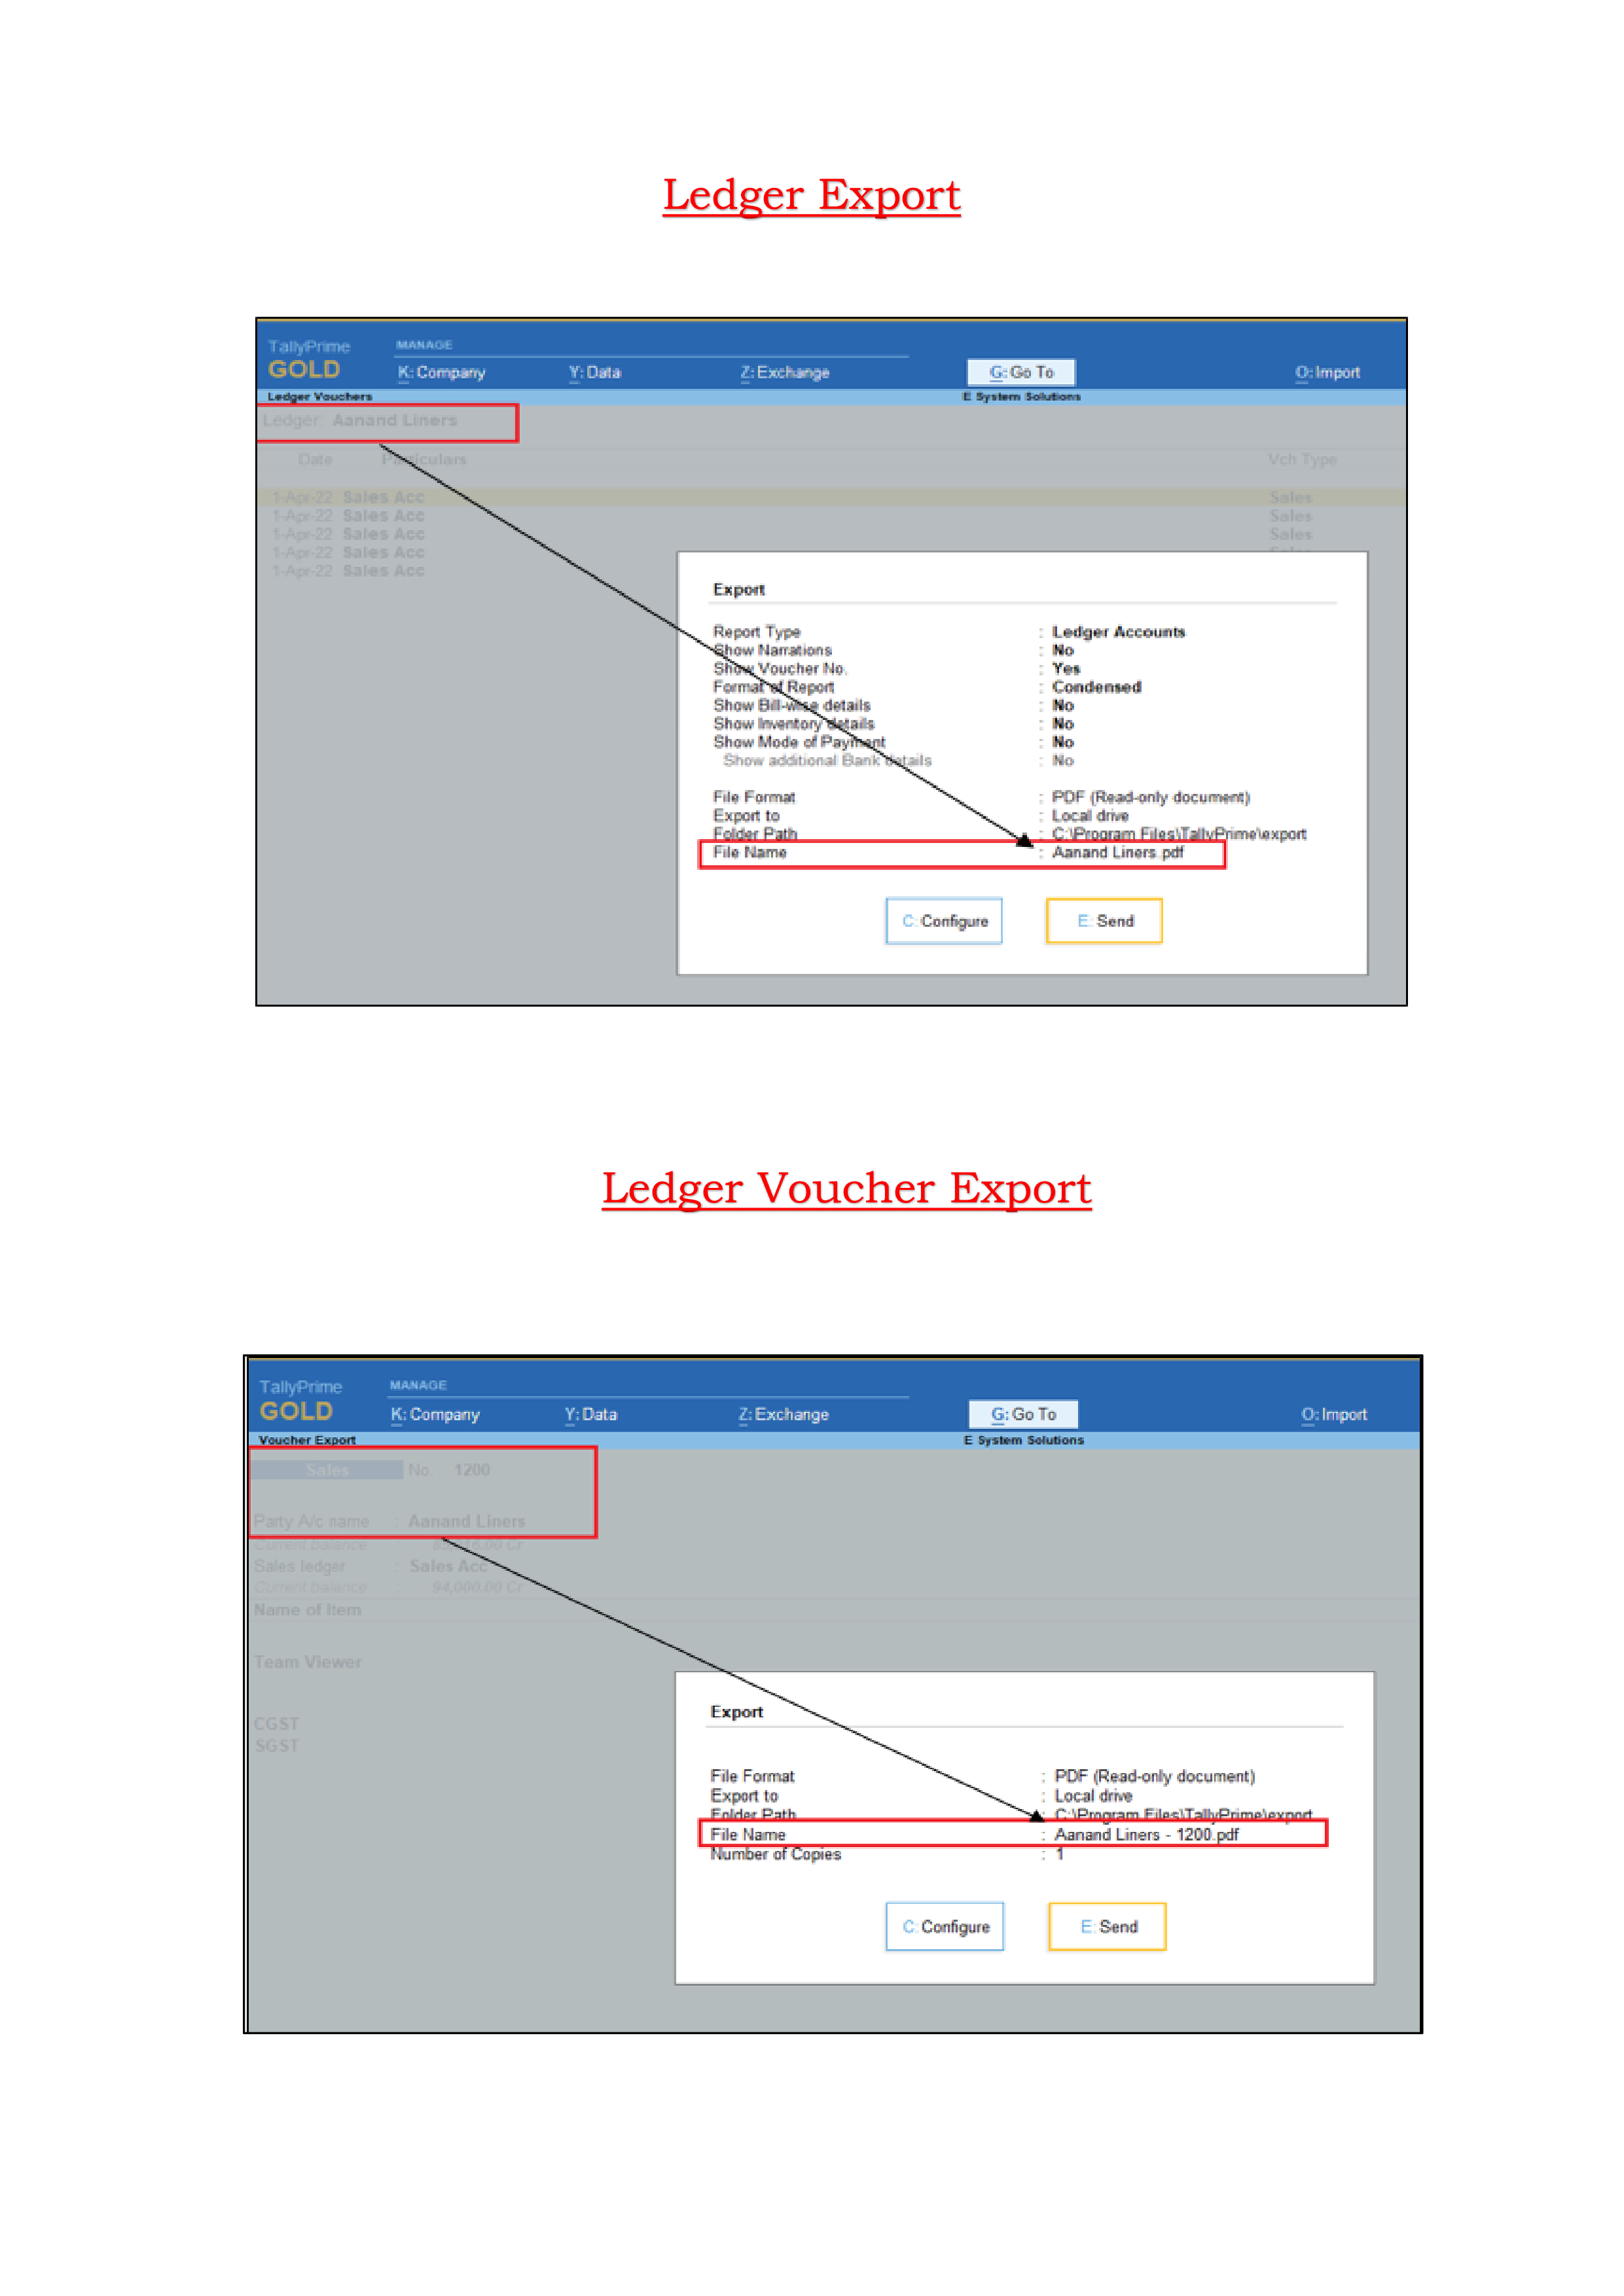 Set Voucher & Ledger Export File Name as Ledger Name